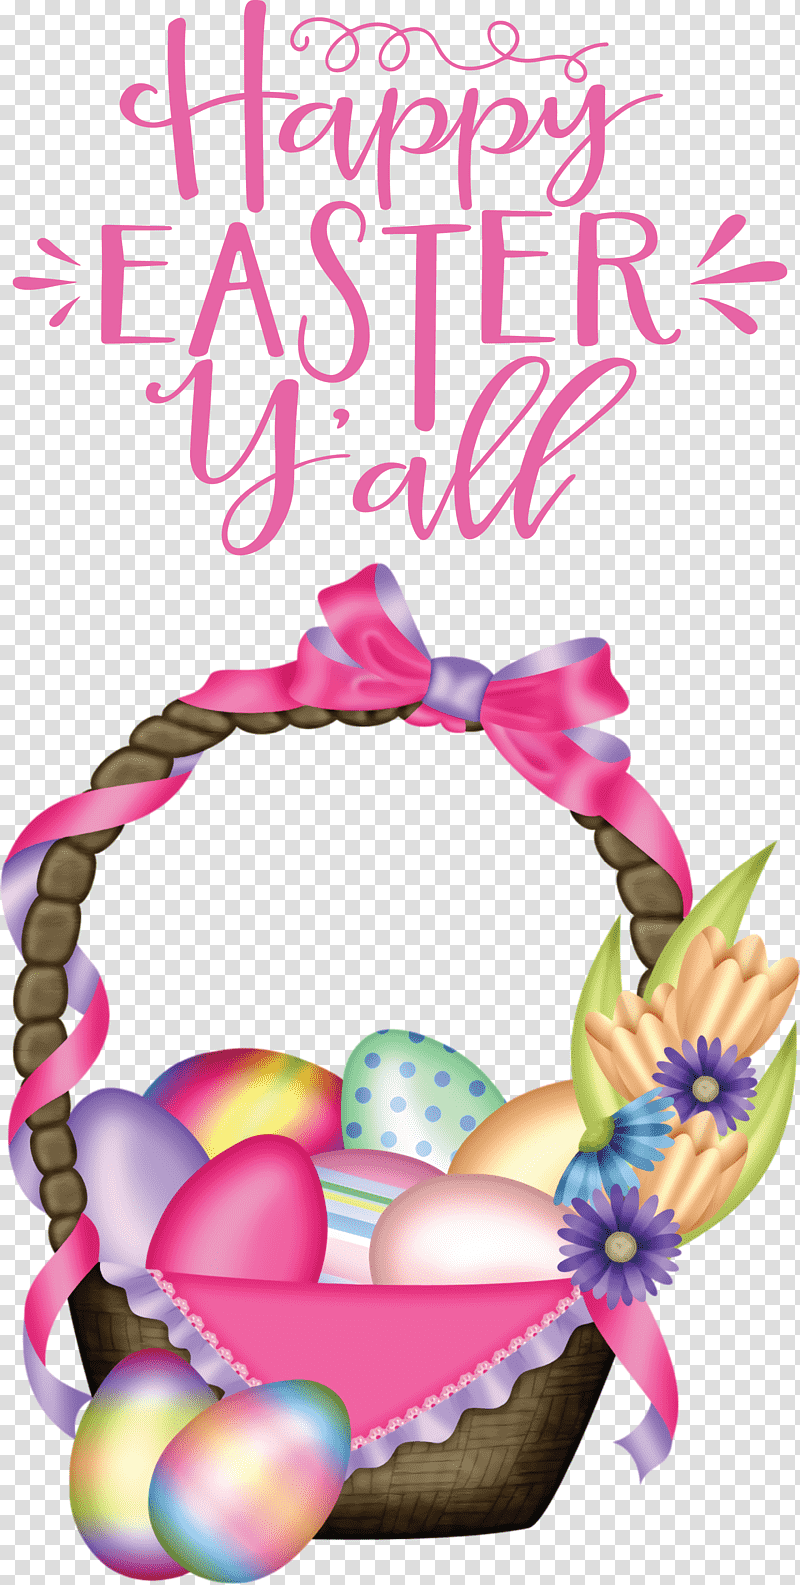 Happy Easter Easter Sunday Easter, Easter
, Easter Bunny, Easter Egg, Easter Basket, Egg Decorating, Chocolate Bunny transparent background PNG clipart